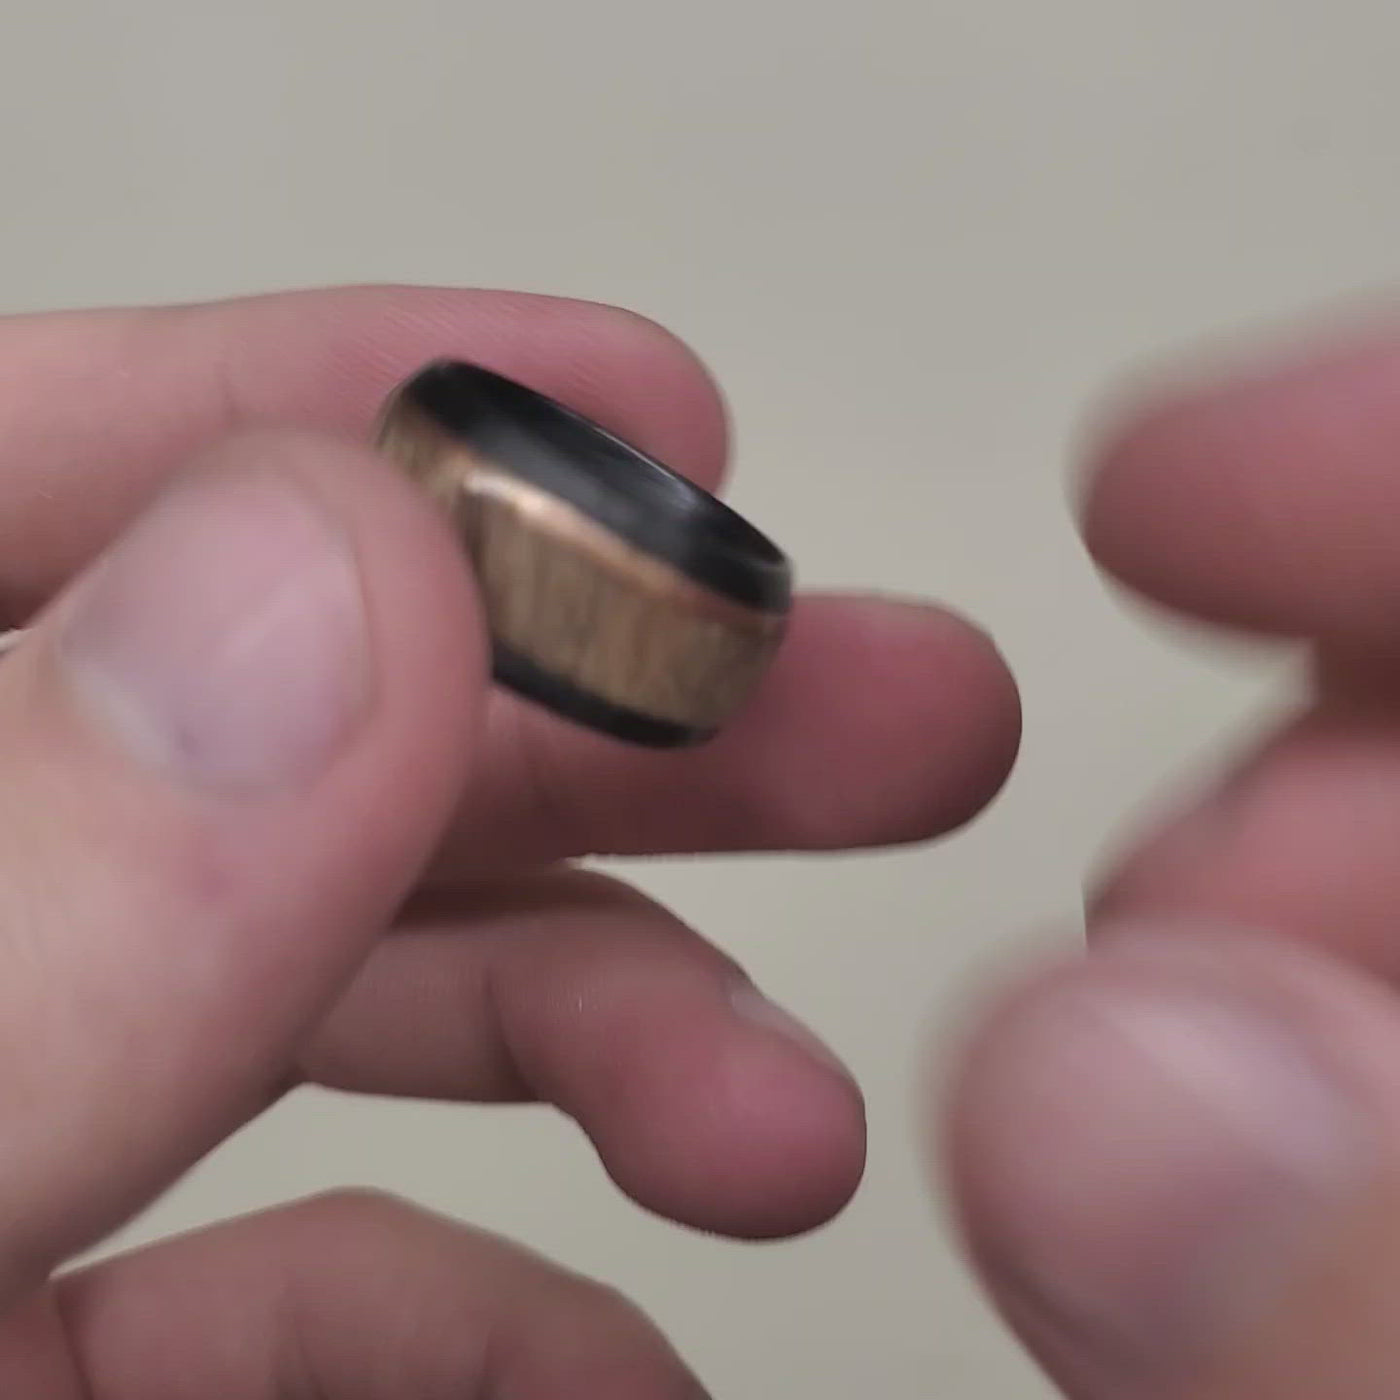 Carbon fiber engagement ring.